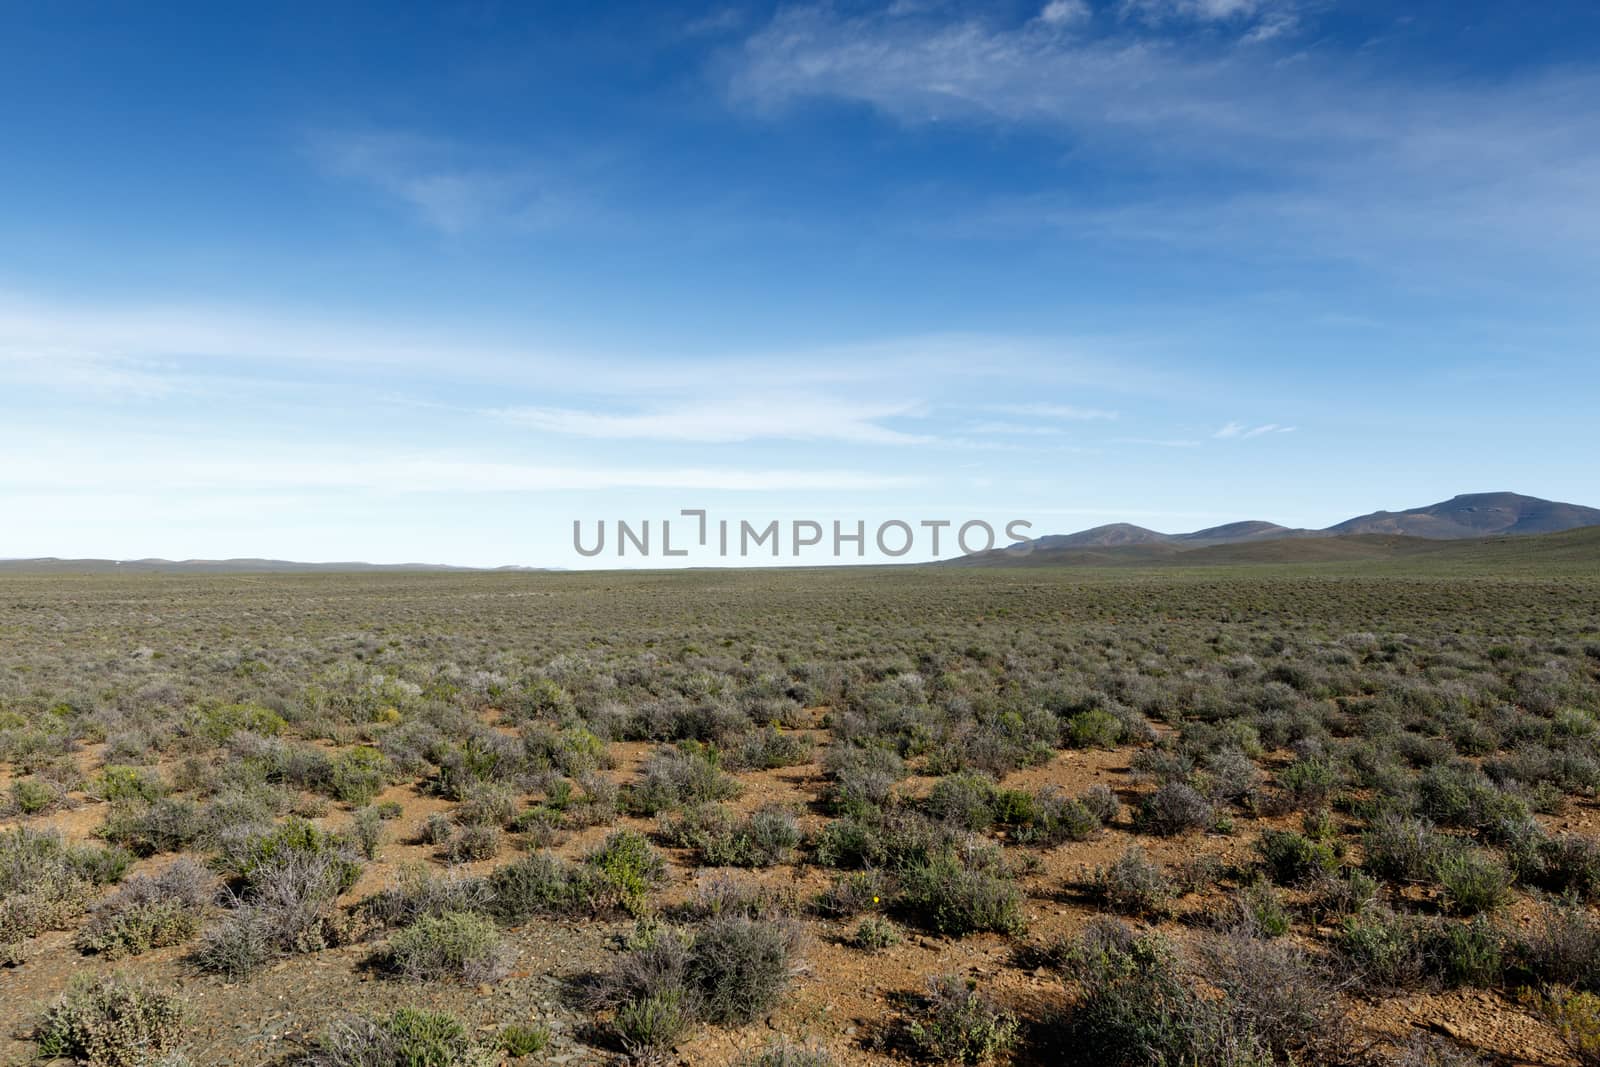 The beautiful Blue Green Flat Tankwa Karoo landscape